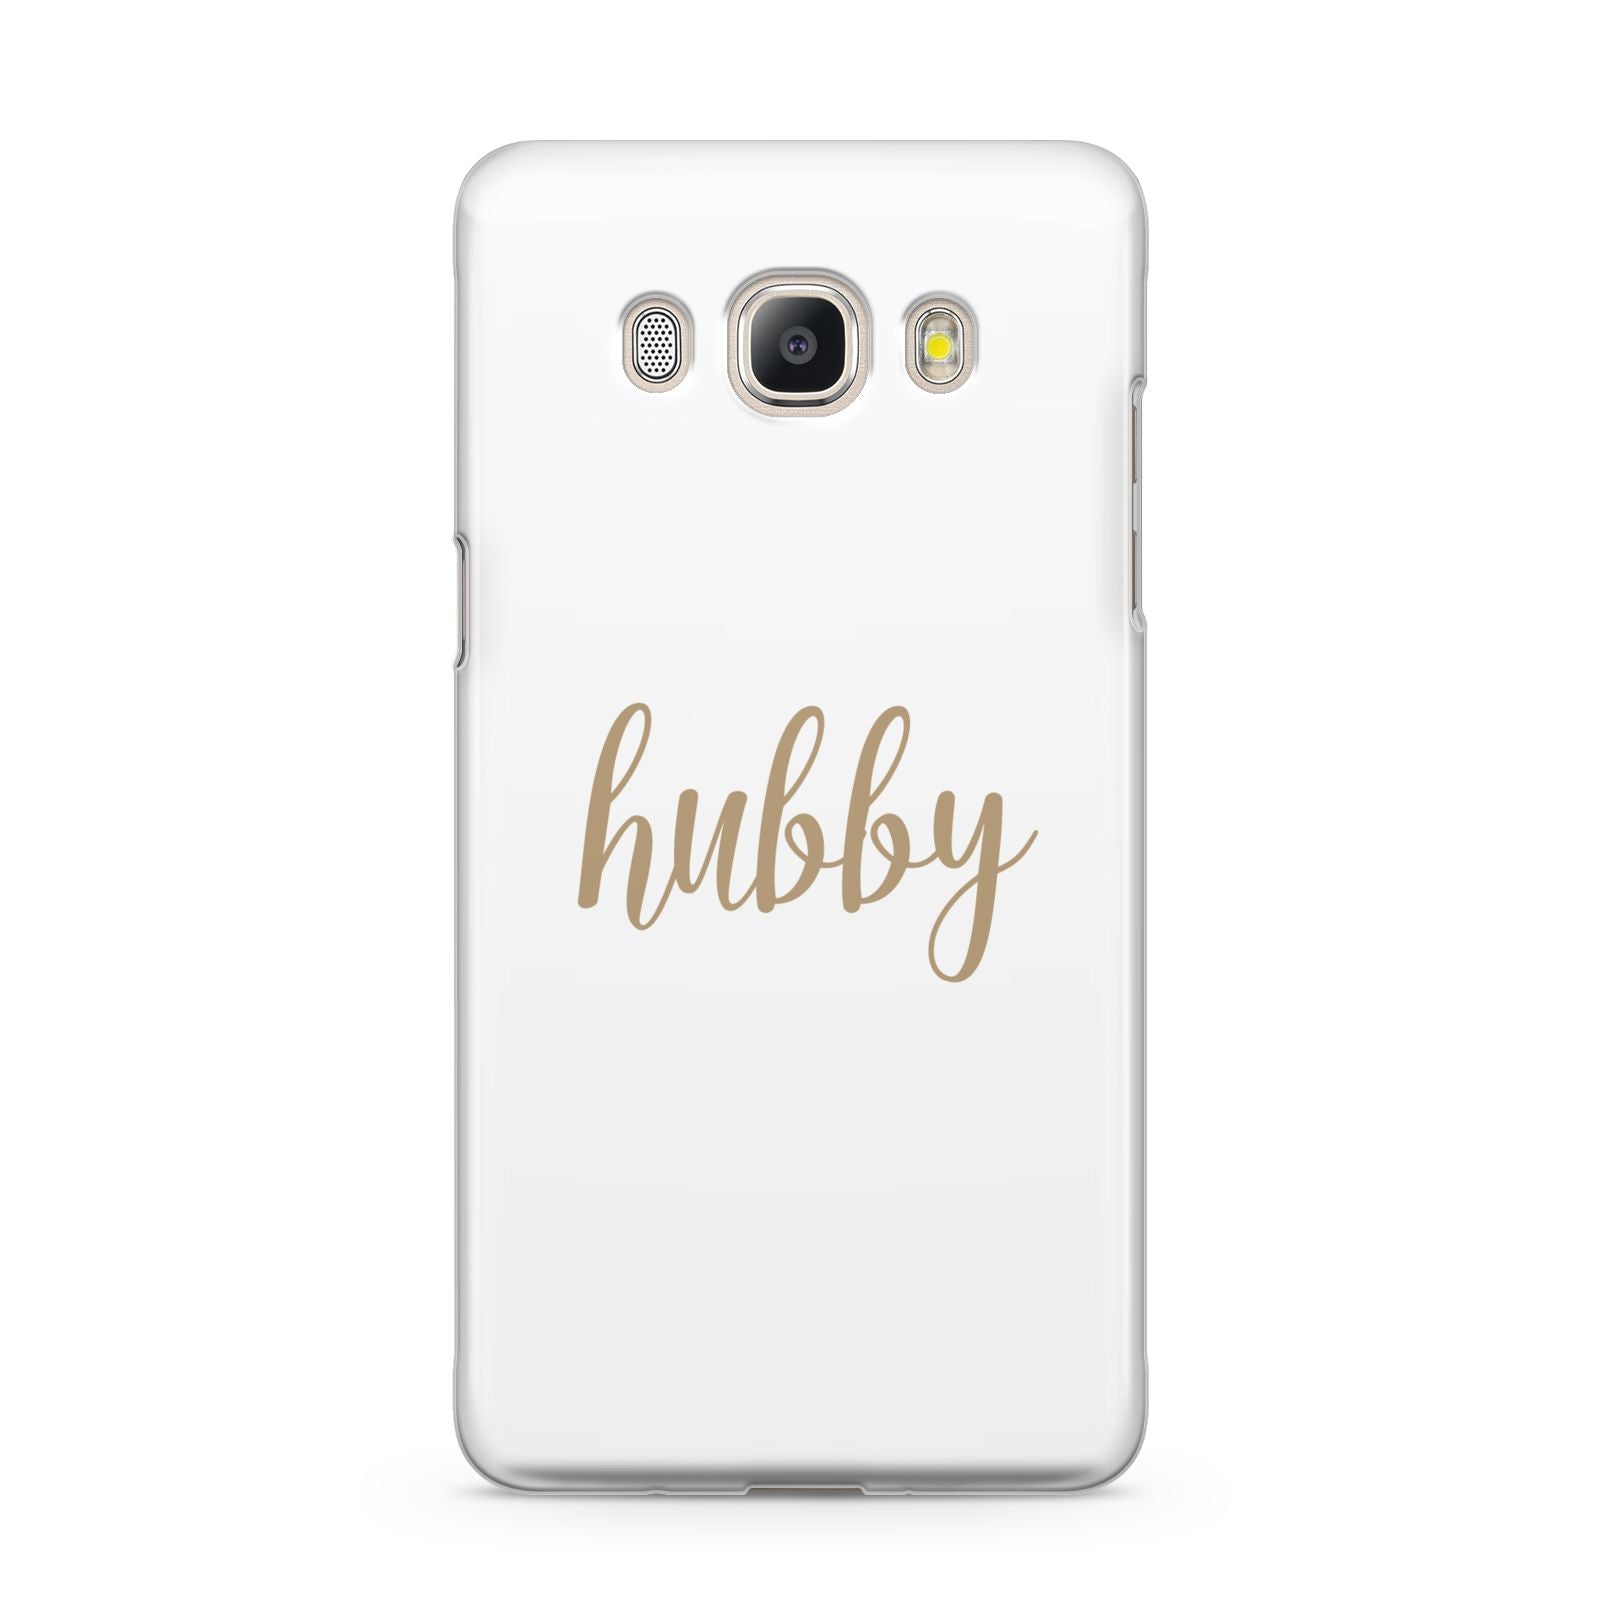 Hubby Samsung Galaxy J5 2016 Case